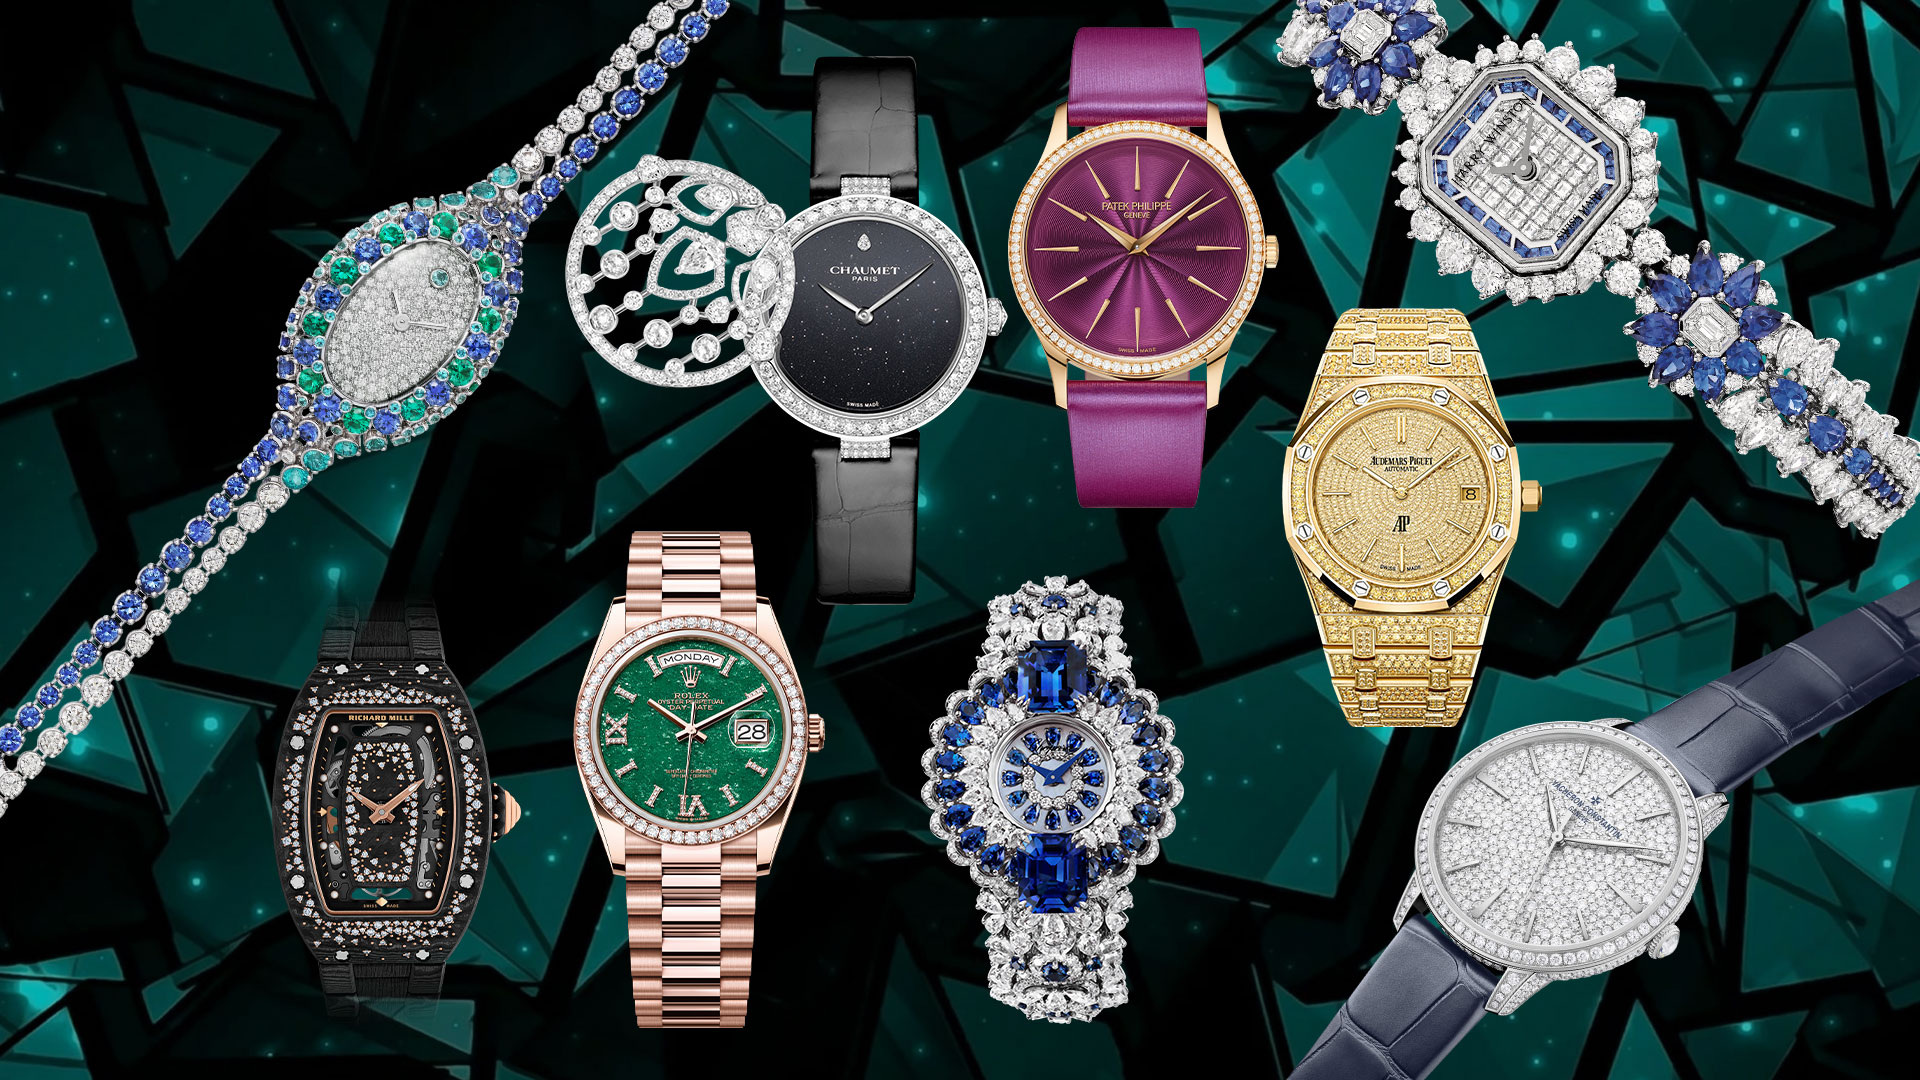 Diamond Precision: Time is more precious when prestigious watchmakers turn to stones